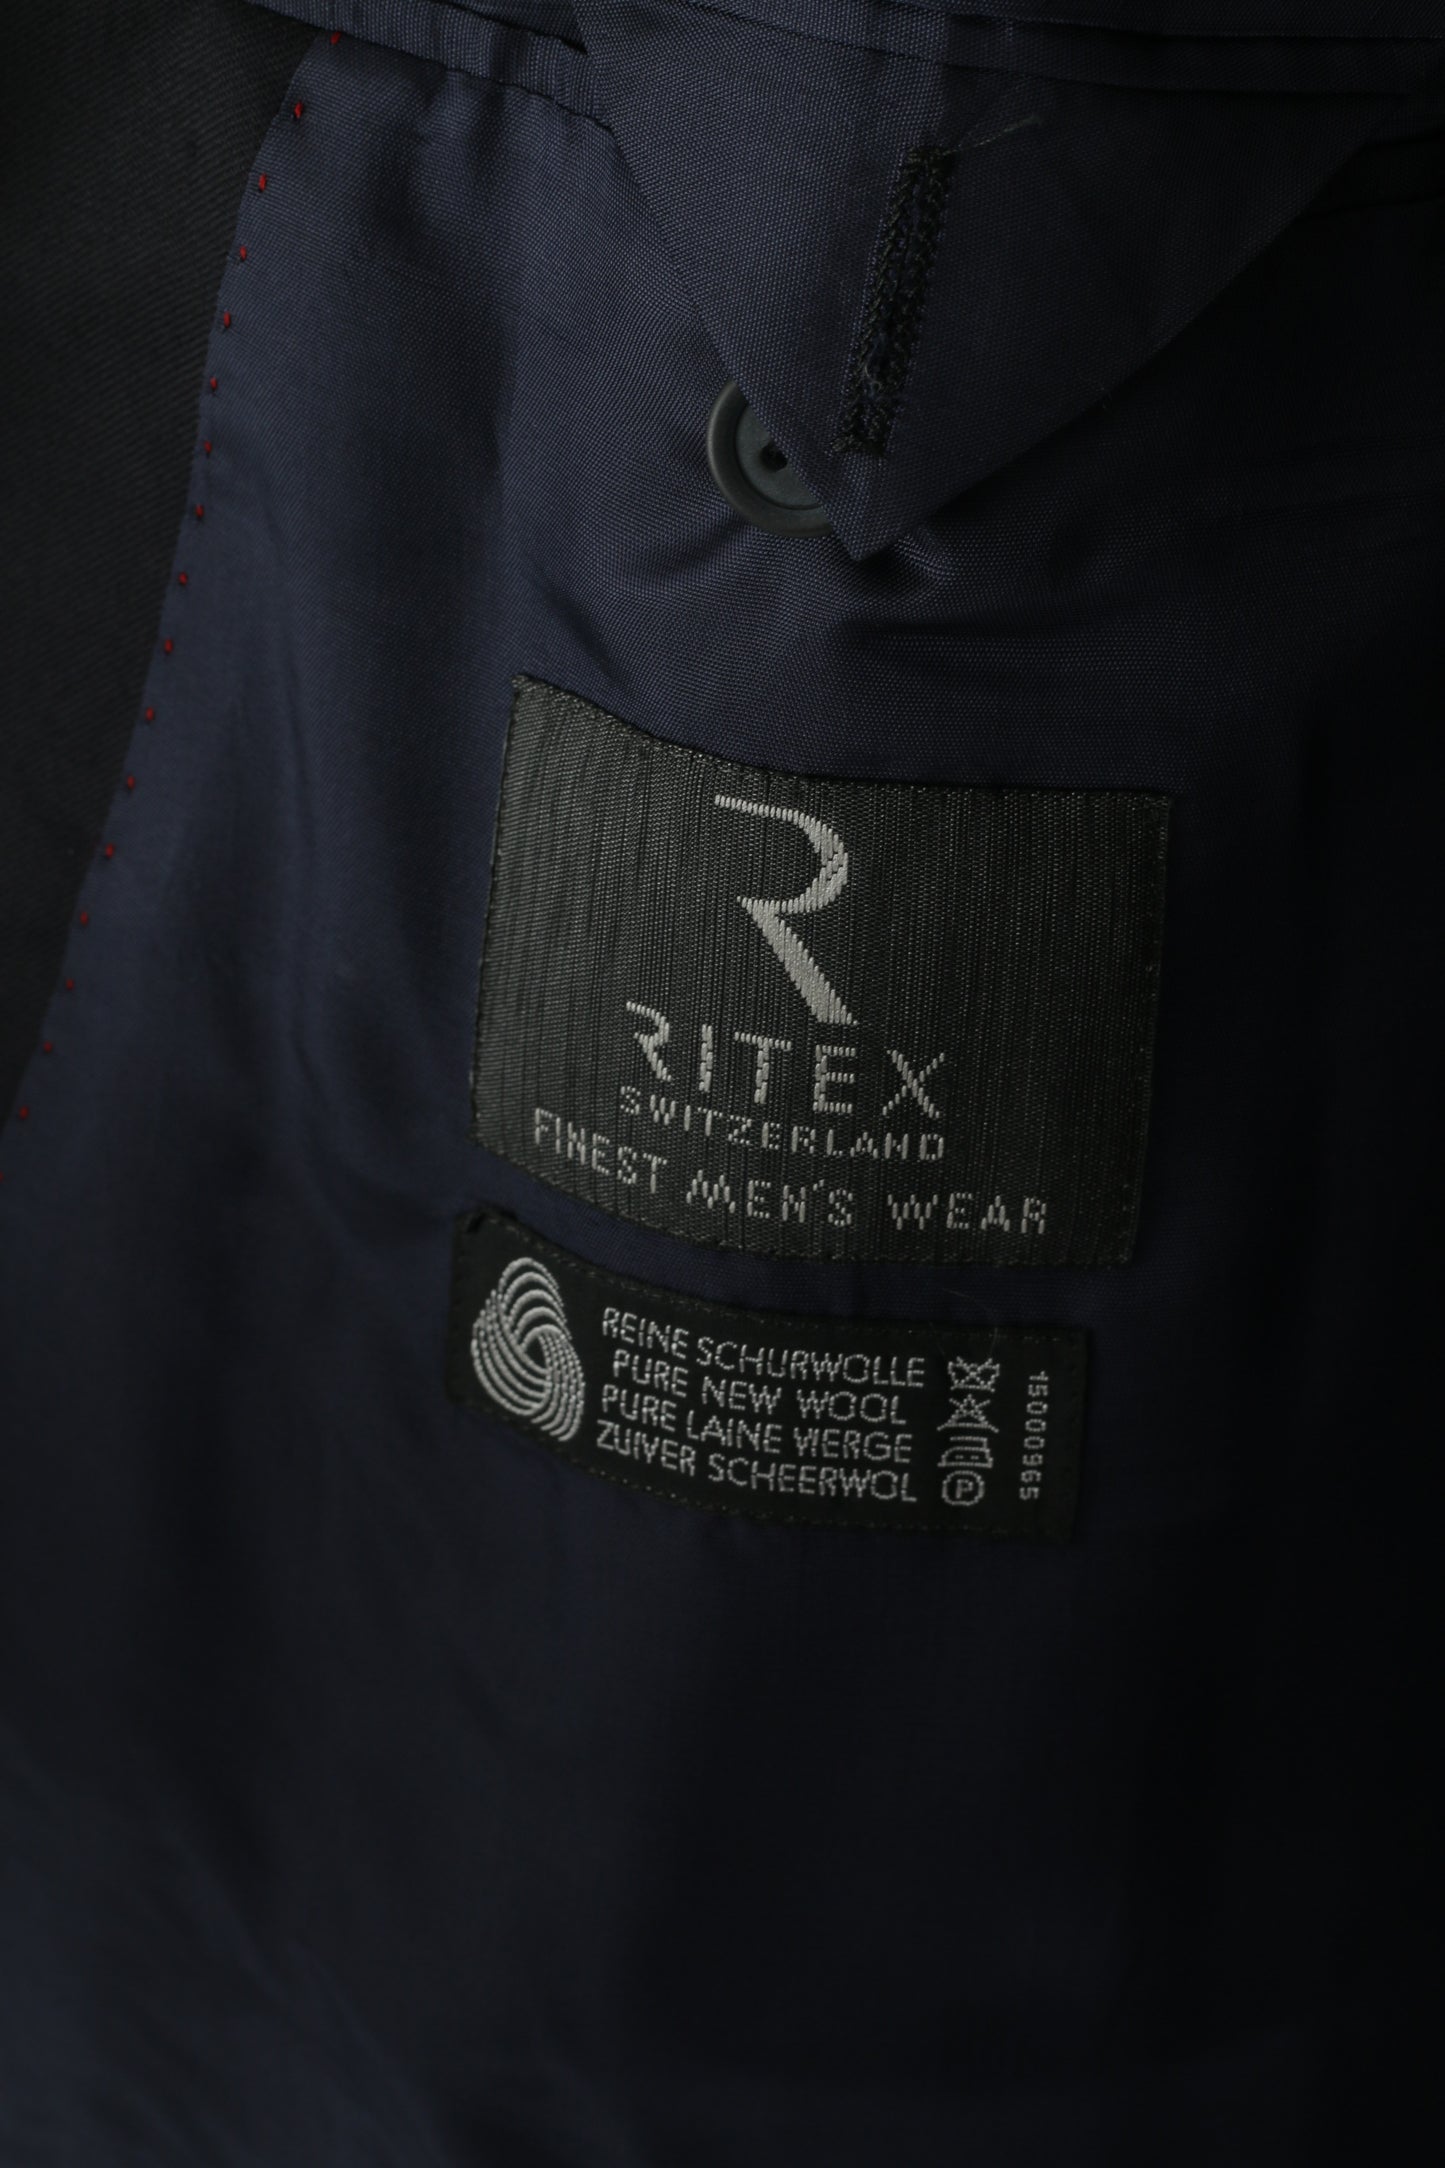 Ritex Switzerland Men 108 44 Blazer Navy Wool Double Breasted Vintage Jacket